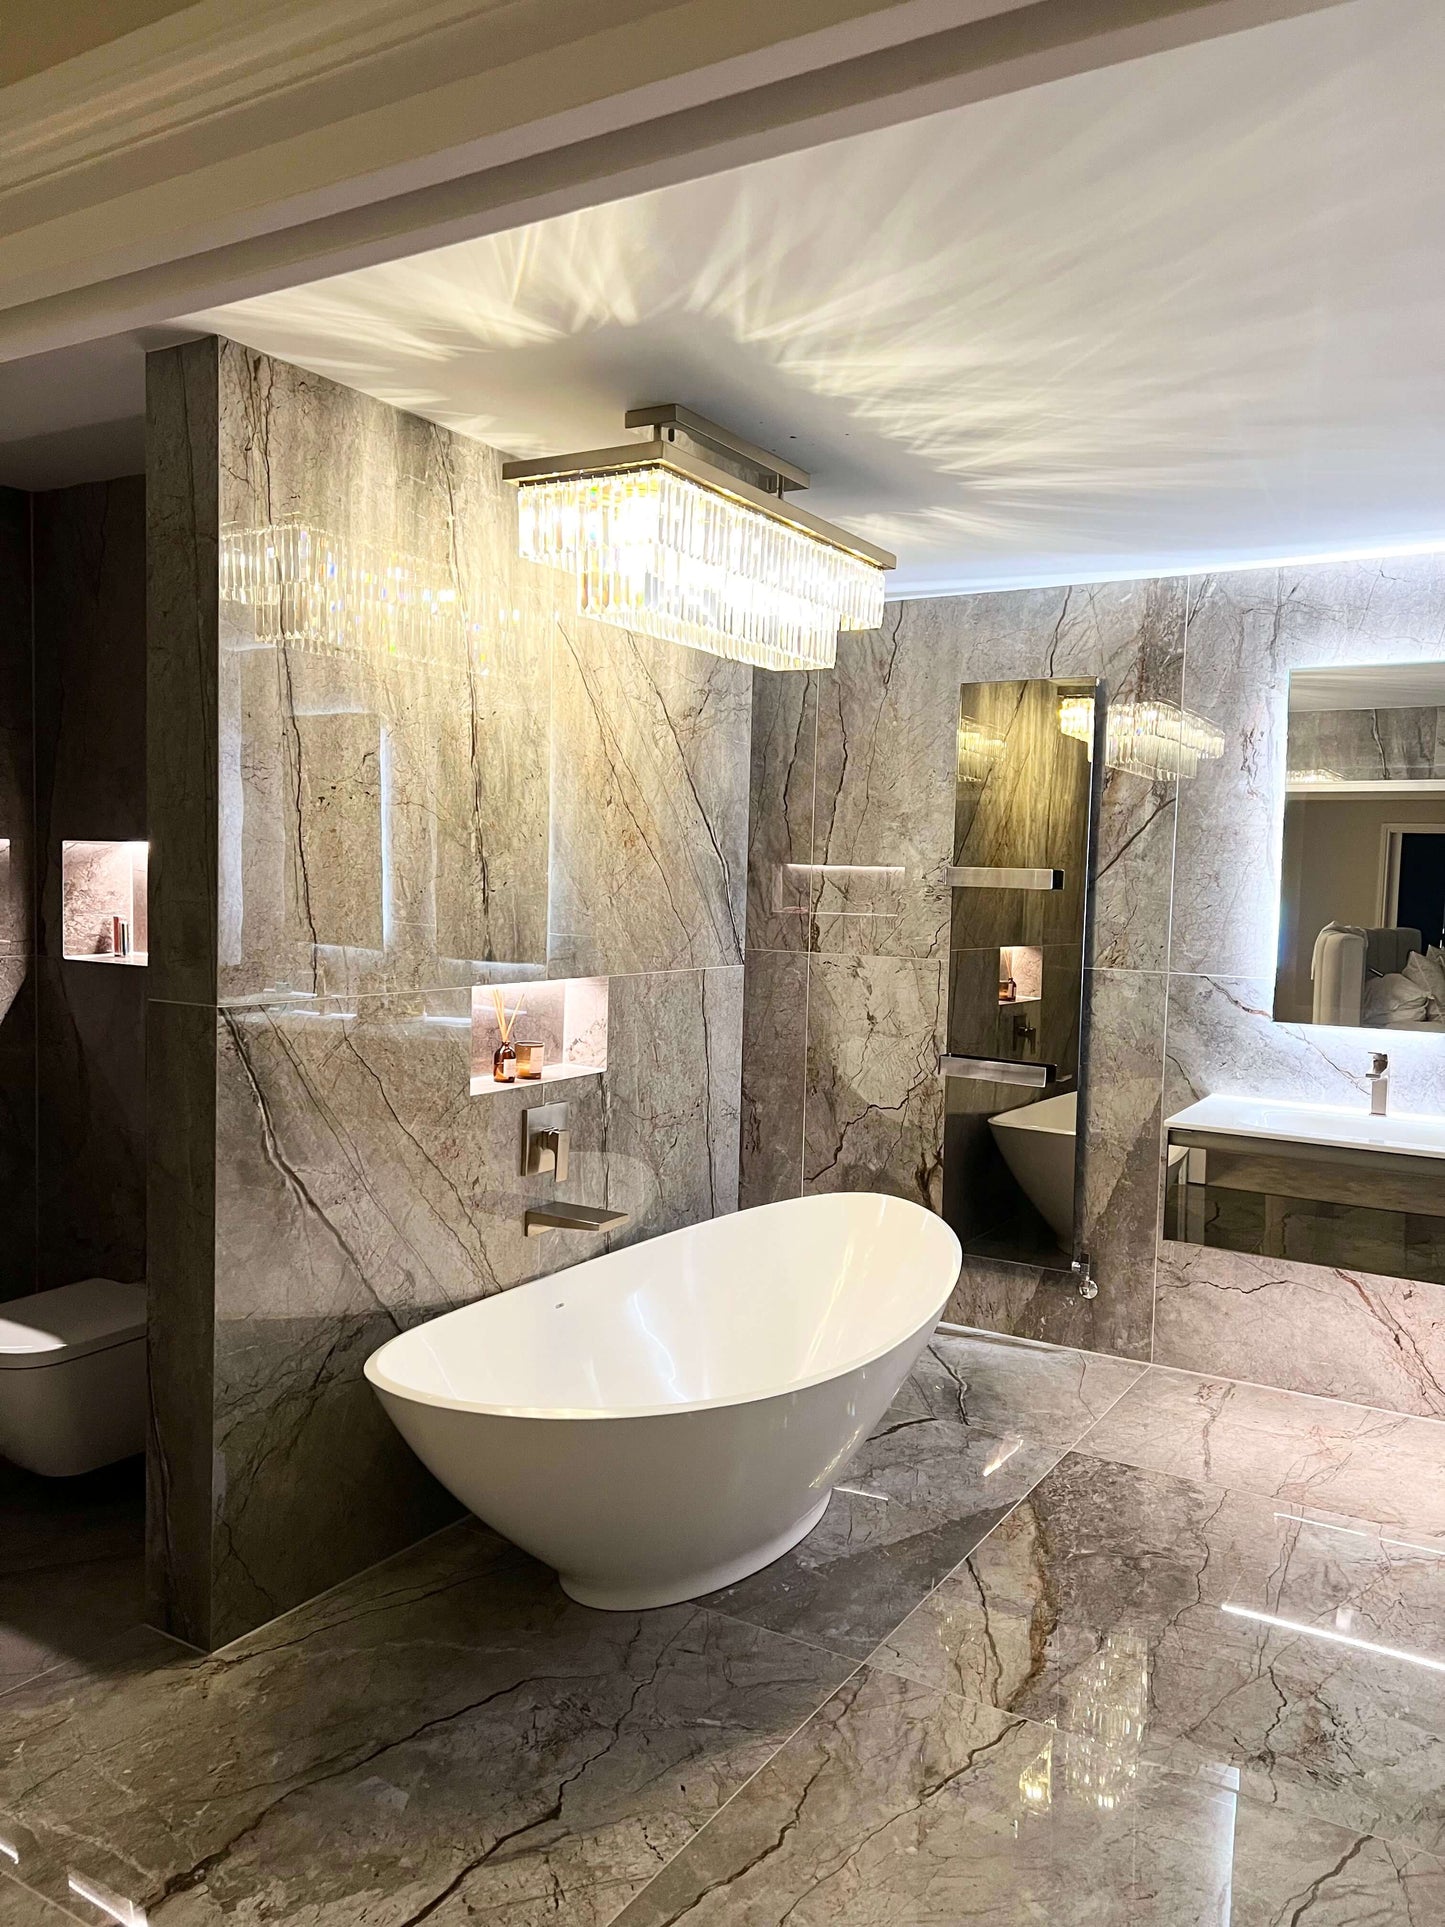 Luxury Bespoke Bathroom IP44 Rated Chandelier